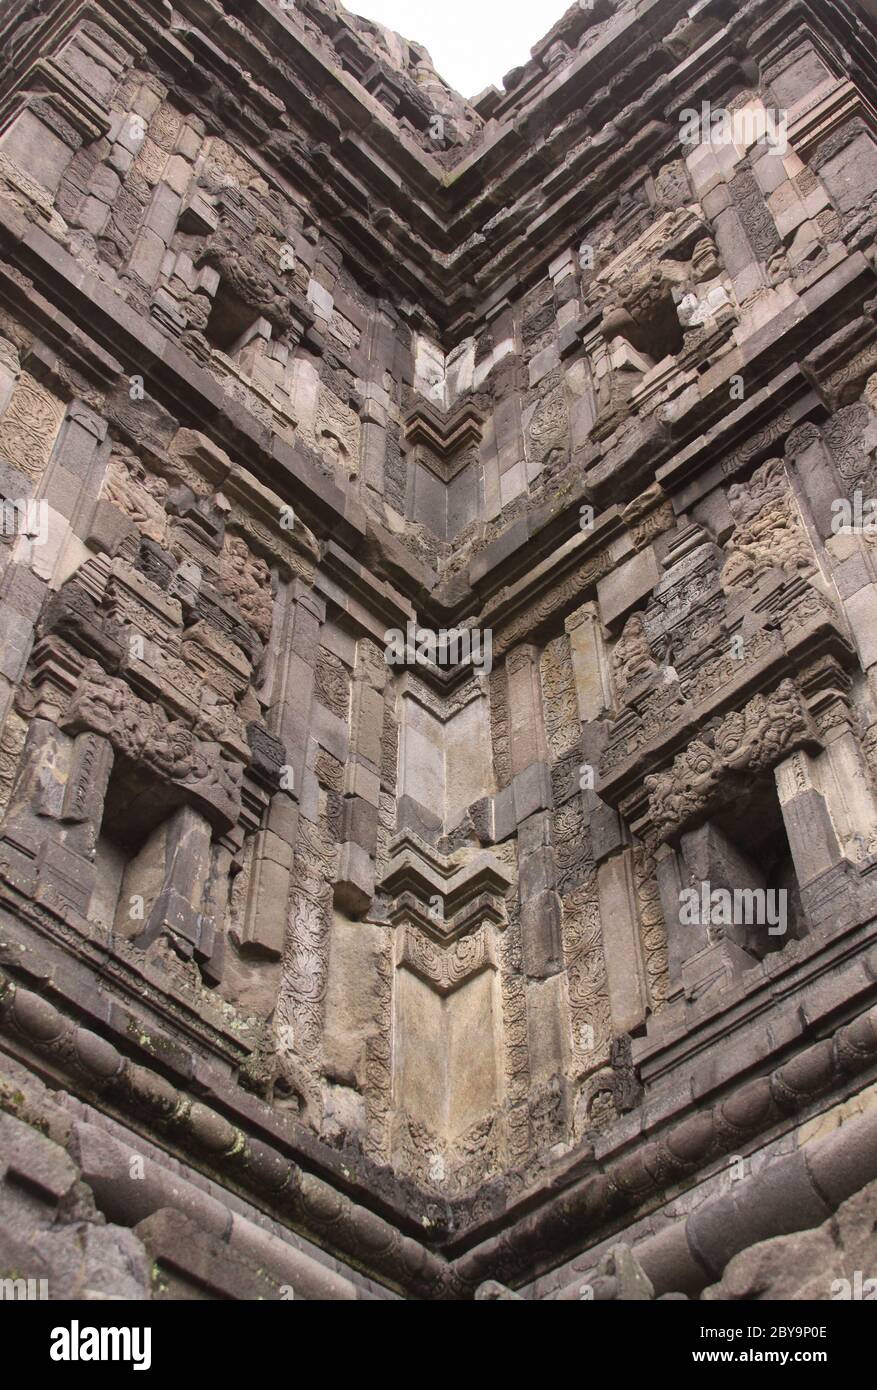 Stone carved detail at famous Prambanan hindu temple, Yogyakarta, Java, Indonesia. Candi Prambanan - Stone structures and rubble at iconic travel dest Stock Photo